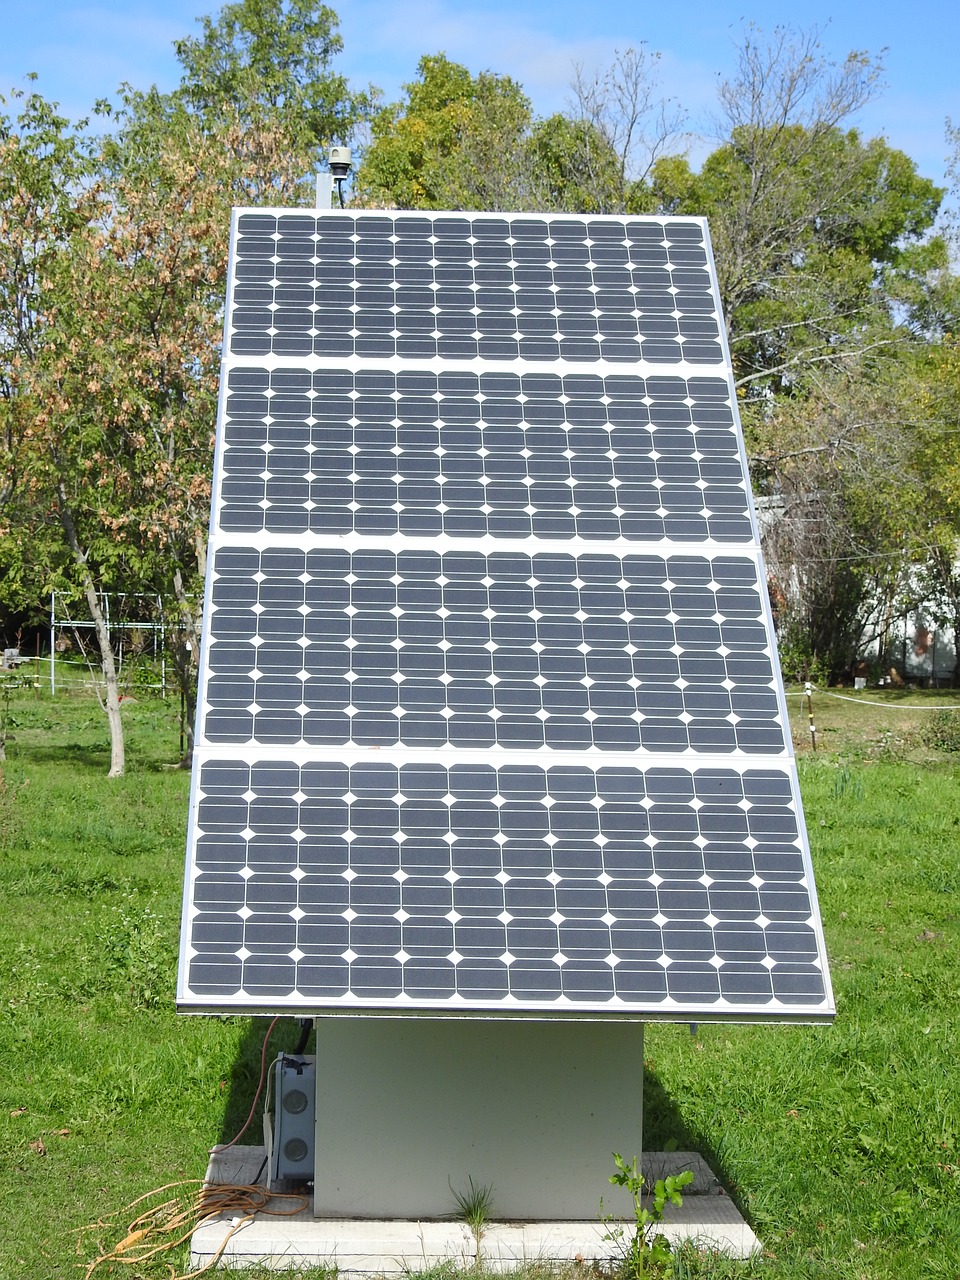 solar power station 120v ac green energy battery backup free photo